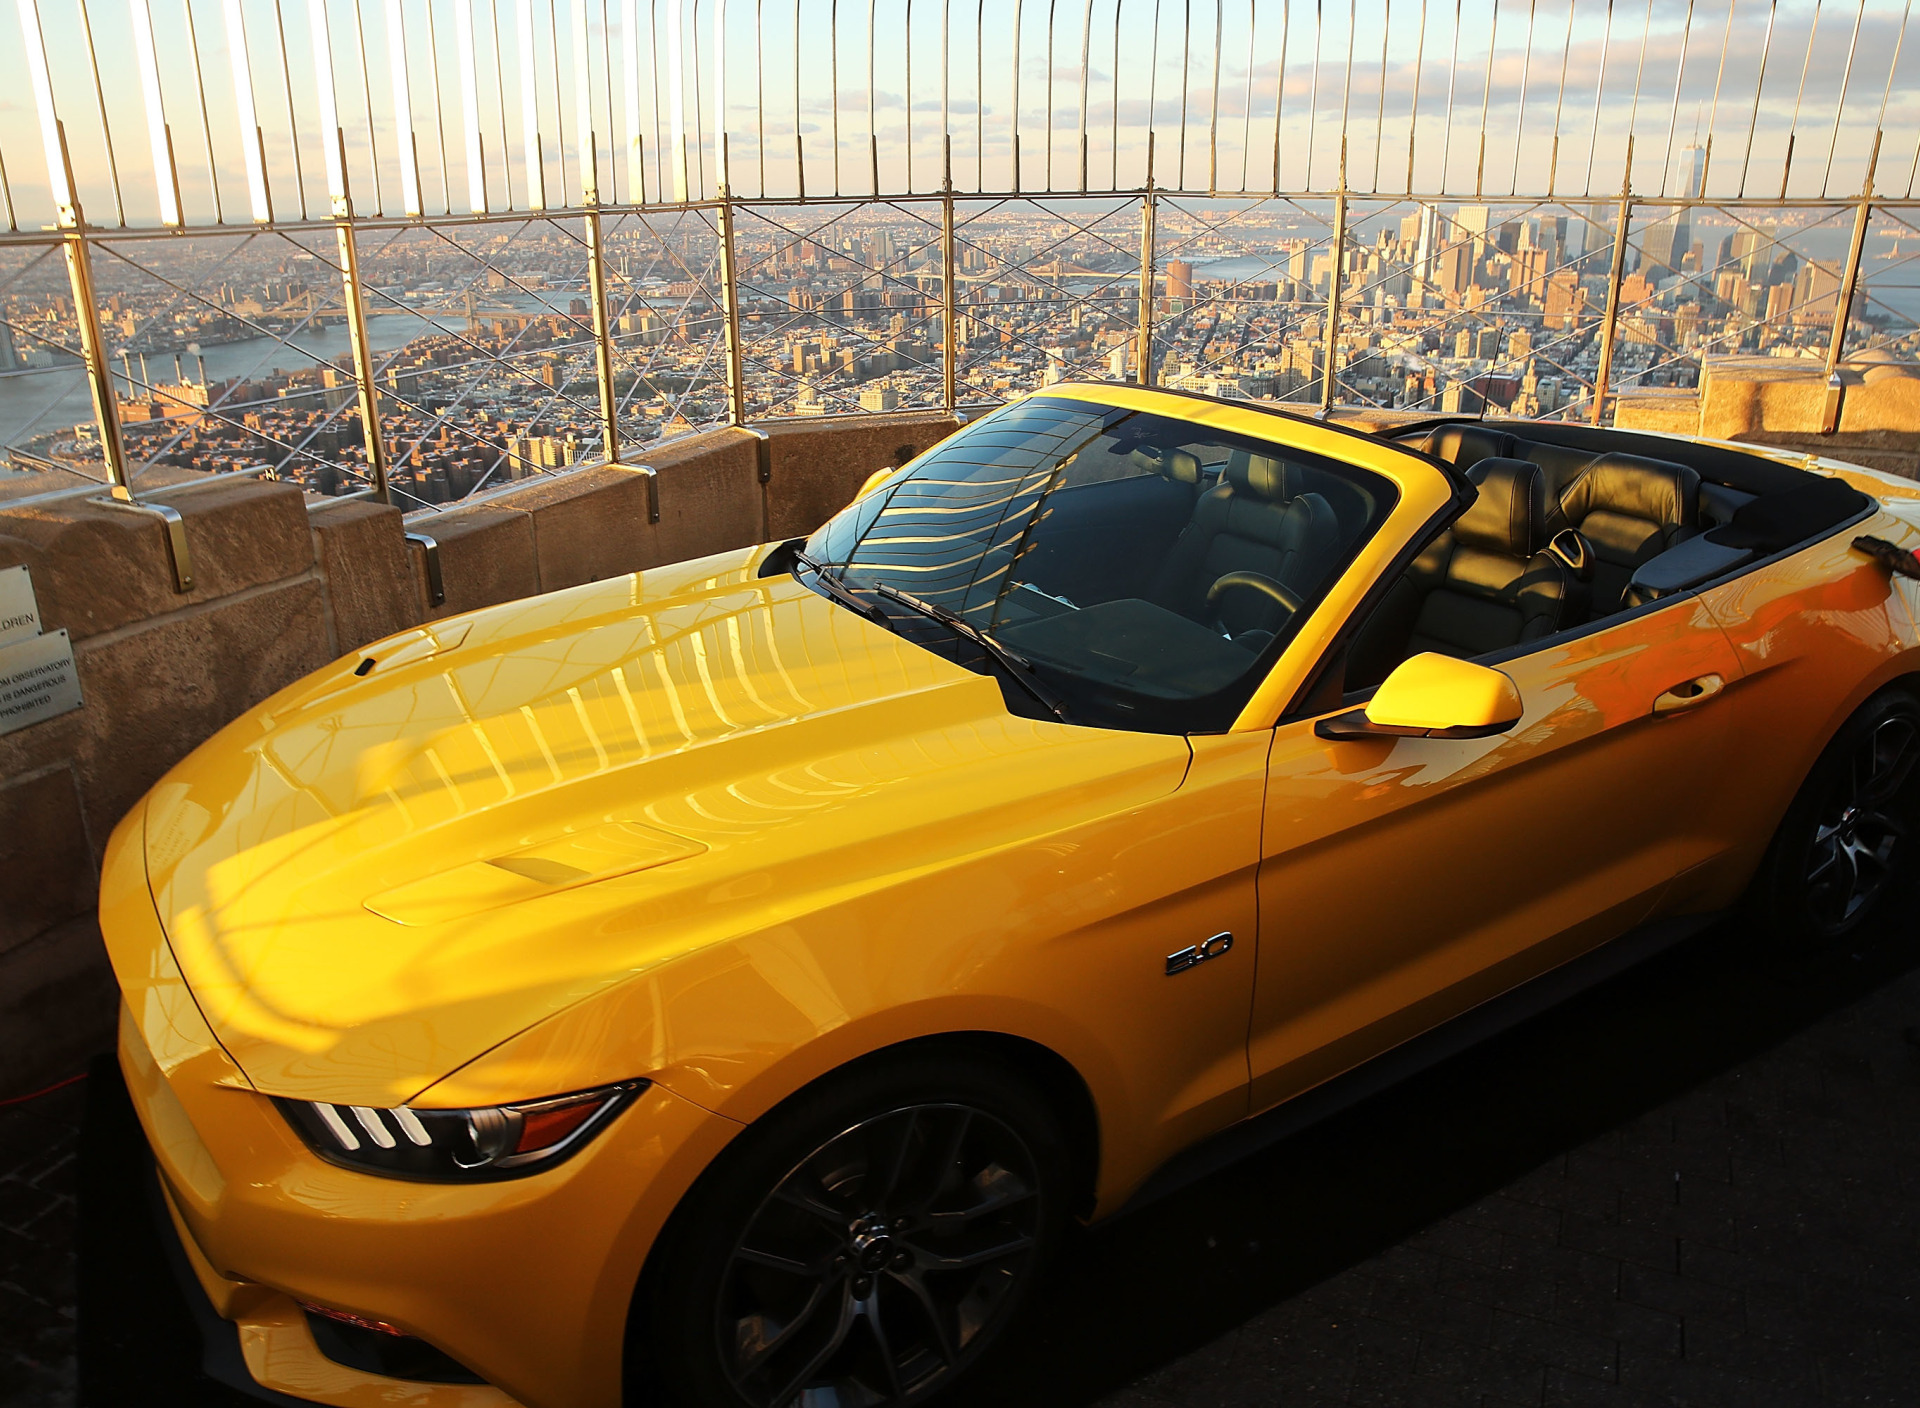 Форд Мустанг 2015 желтый кабриолет. Форд Мустанг кабриолет желтый. Ford Mustang 2017 желтый кабриолет. Мустанг кабриолет 2021. Включи машину 21